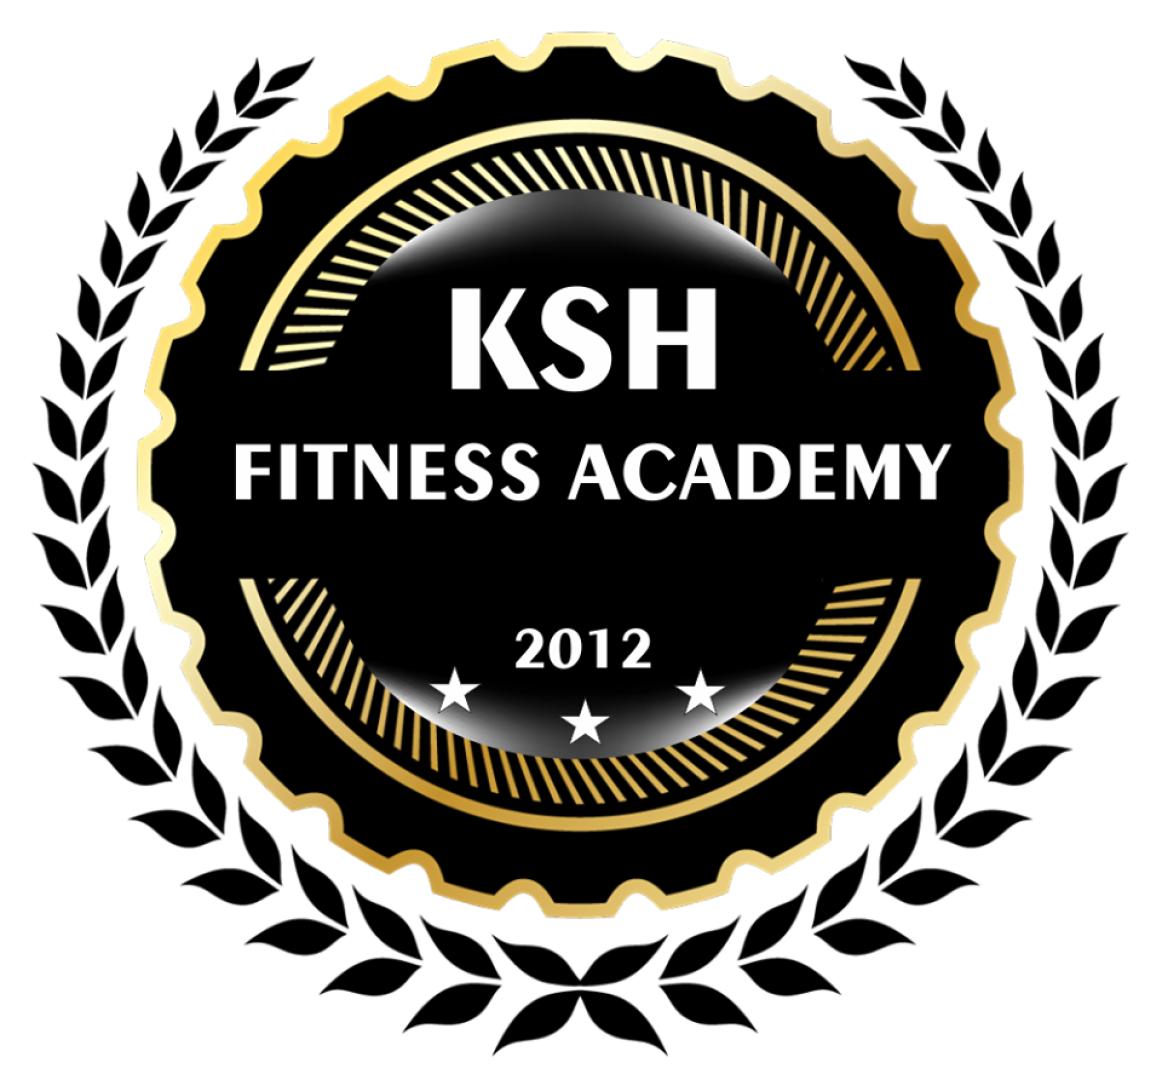 KSH Fitness Academy